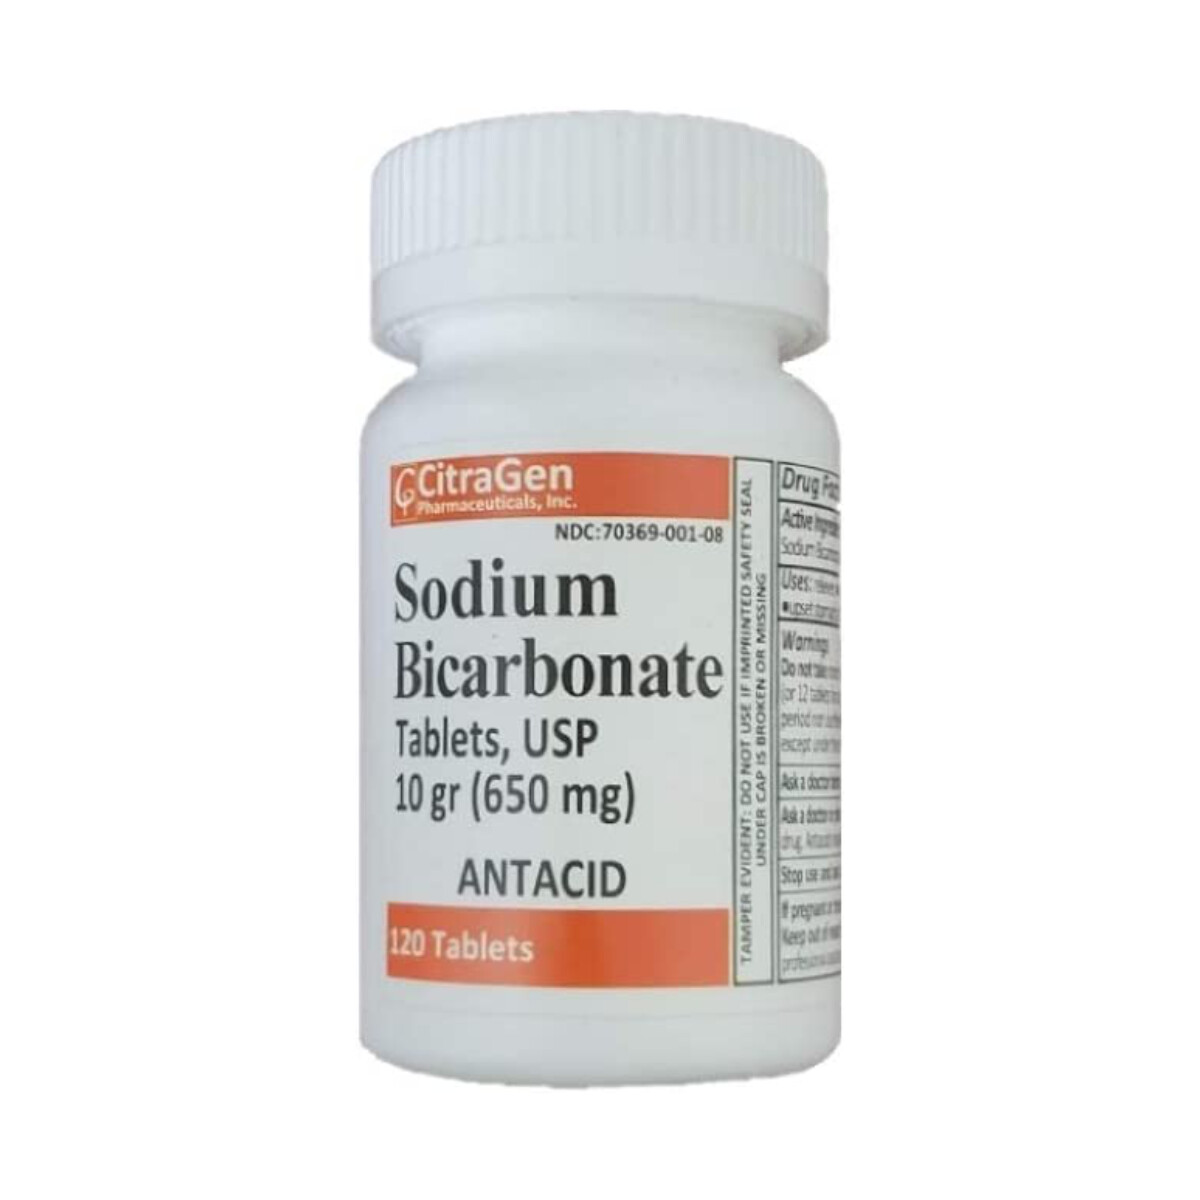 Sodium Bicarbonate Tablets USP 650 mg (10 Grains, 120 Tablets)